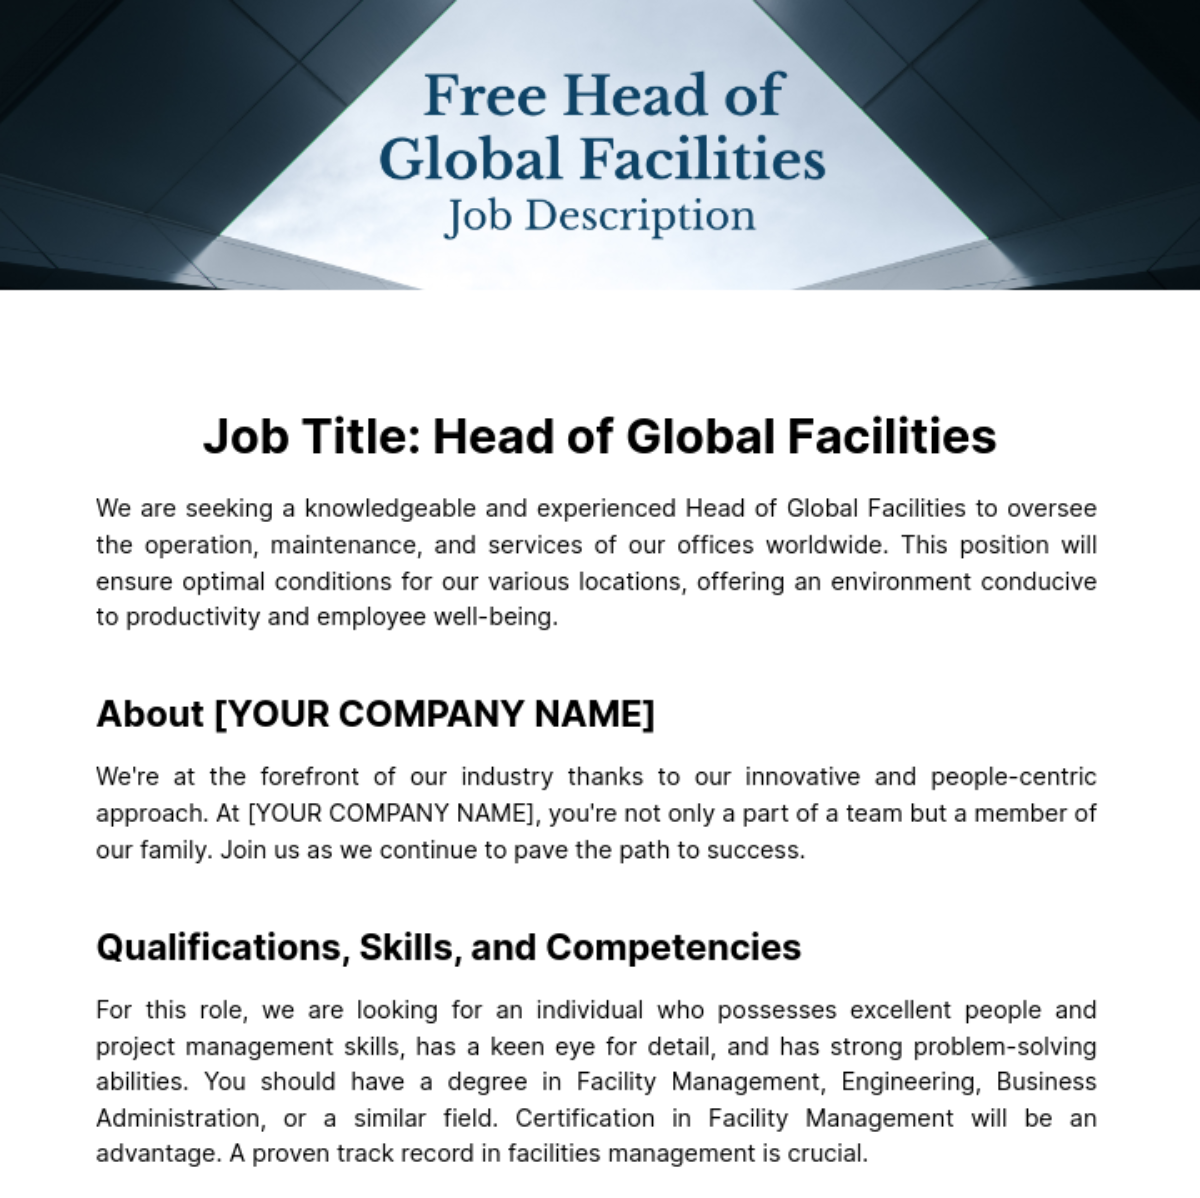 Free Head of Global Facilities Job Description Template